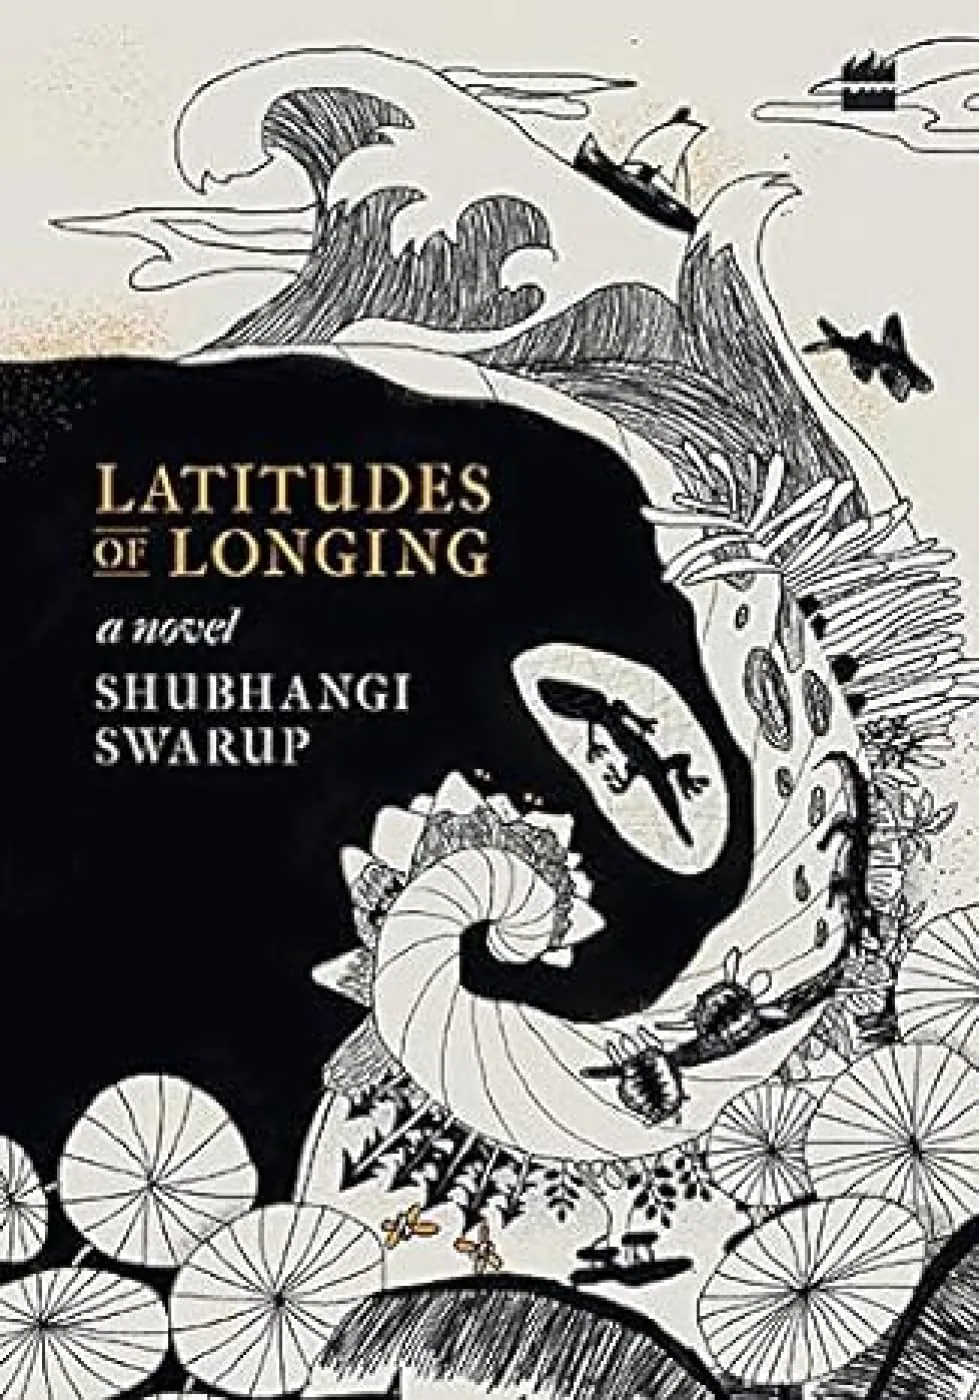 Latitudes of Longing by Shubhangi Swarup (1)